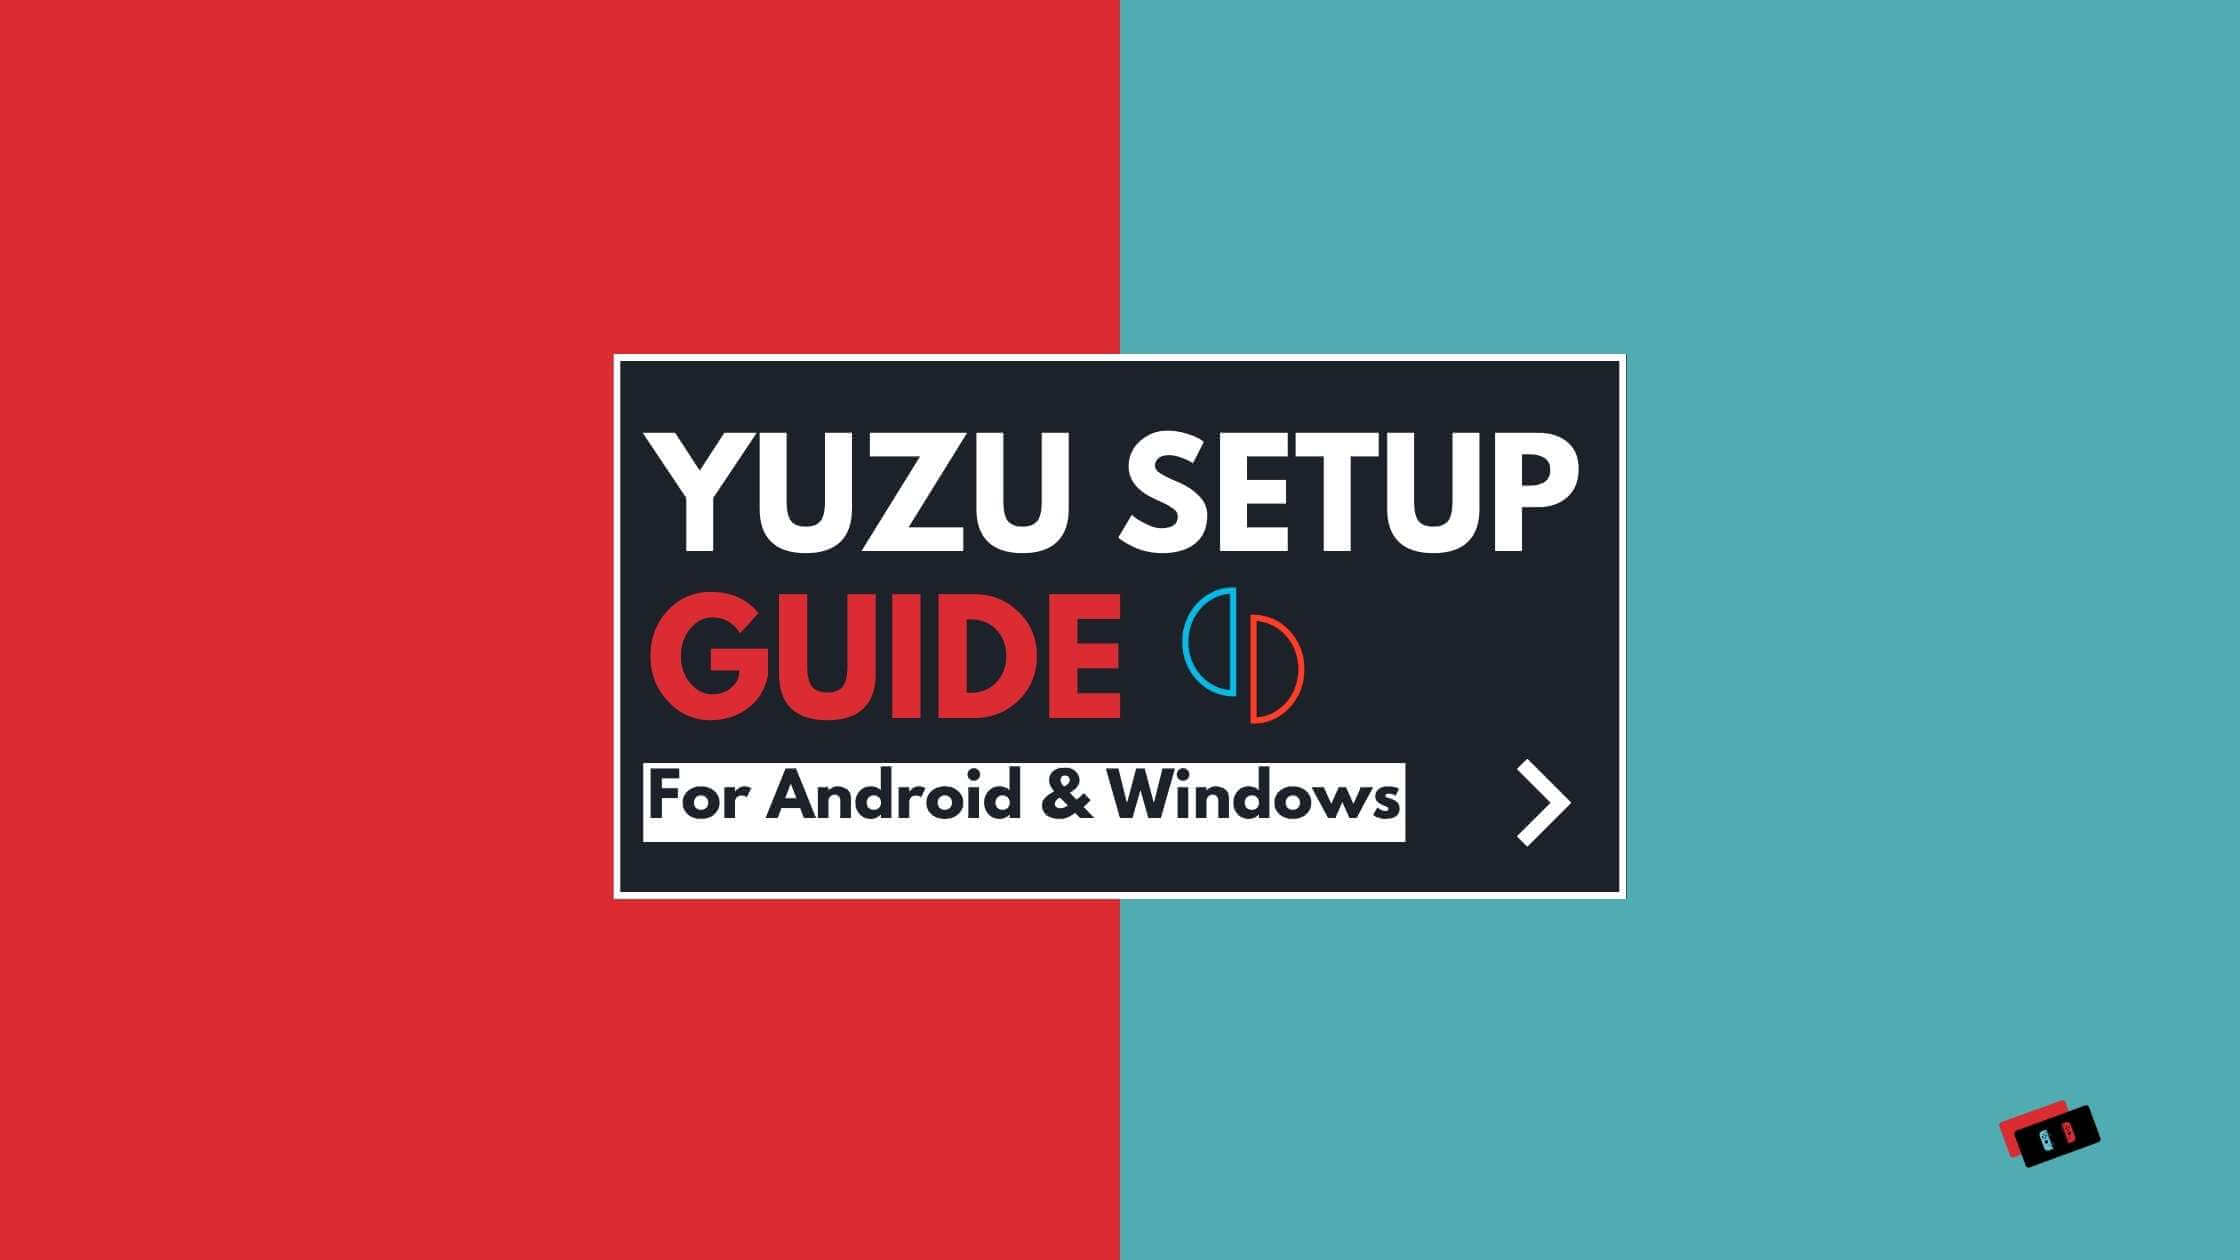 YUZU EMULATOR-HOW TO SET-UP ONLINE MULTIPLAYER FULL SETUP GUIDE (YUZU  EMULATOR ONLINE) 